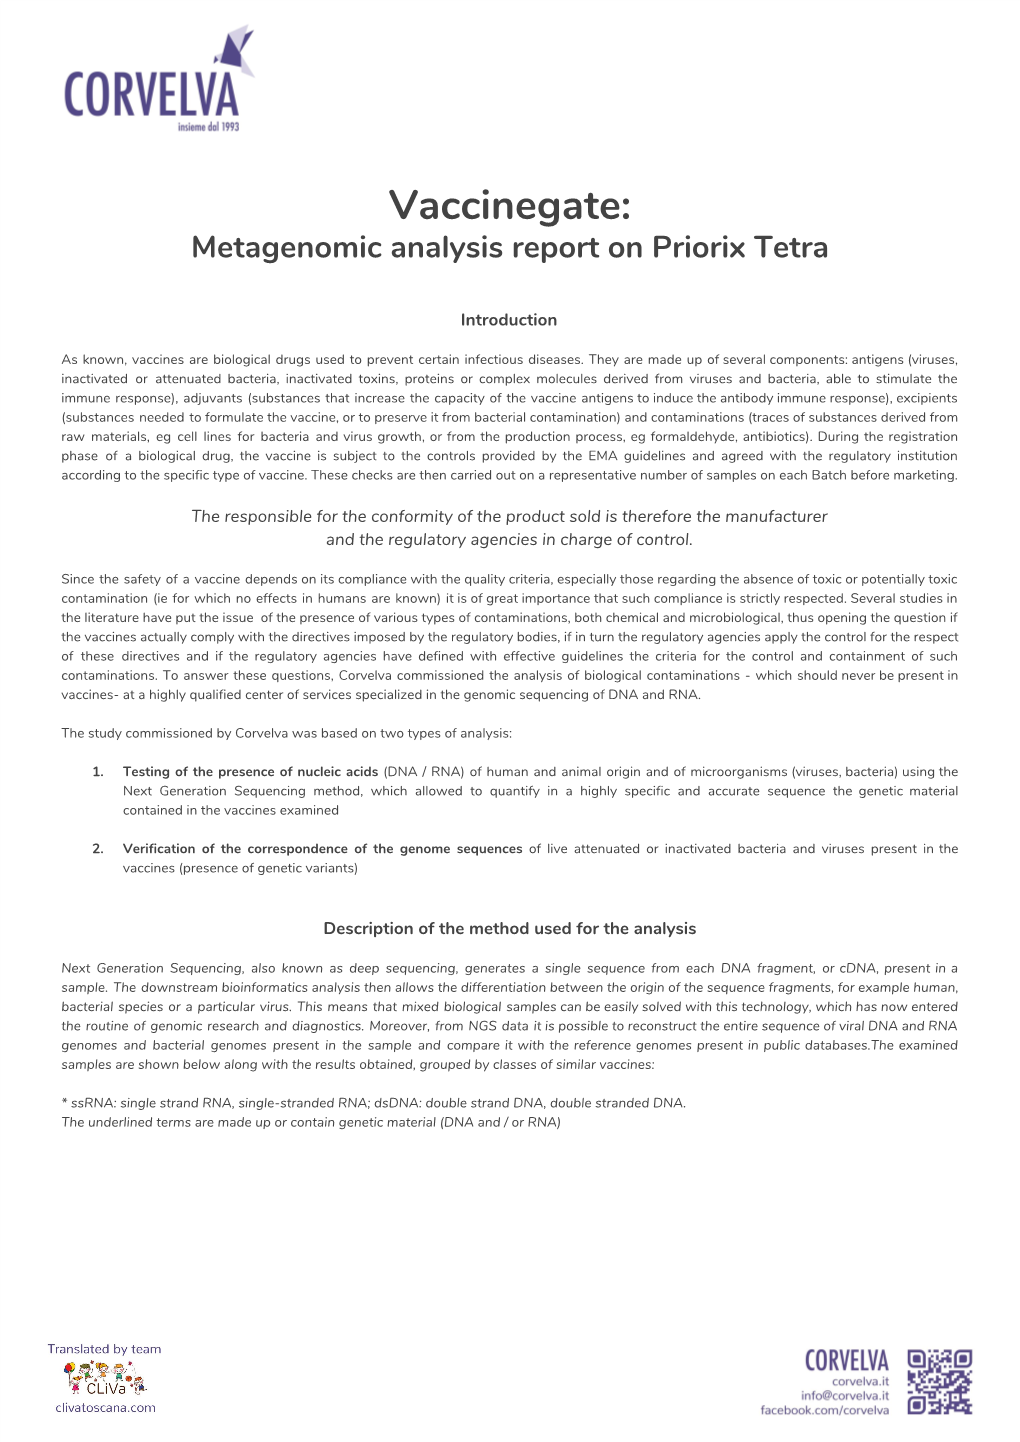 Vaccinegate: Metagenomic Analysis Report on Priorix Tetra